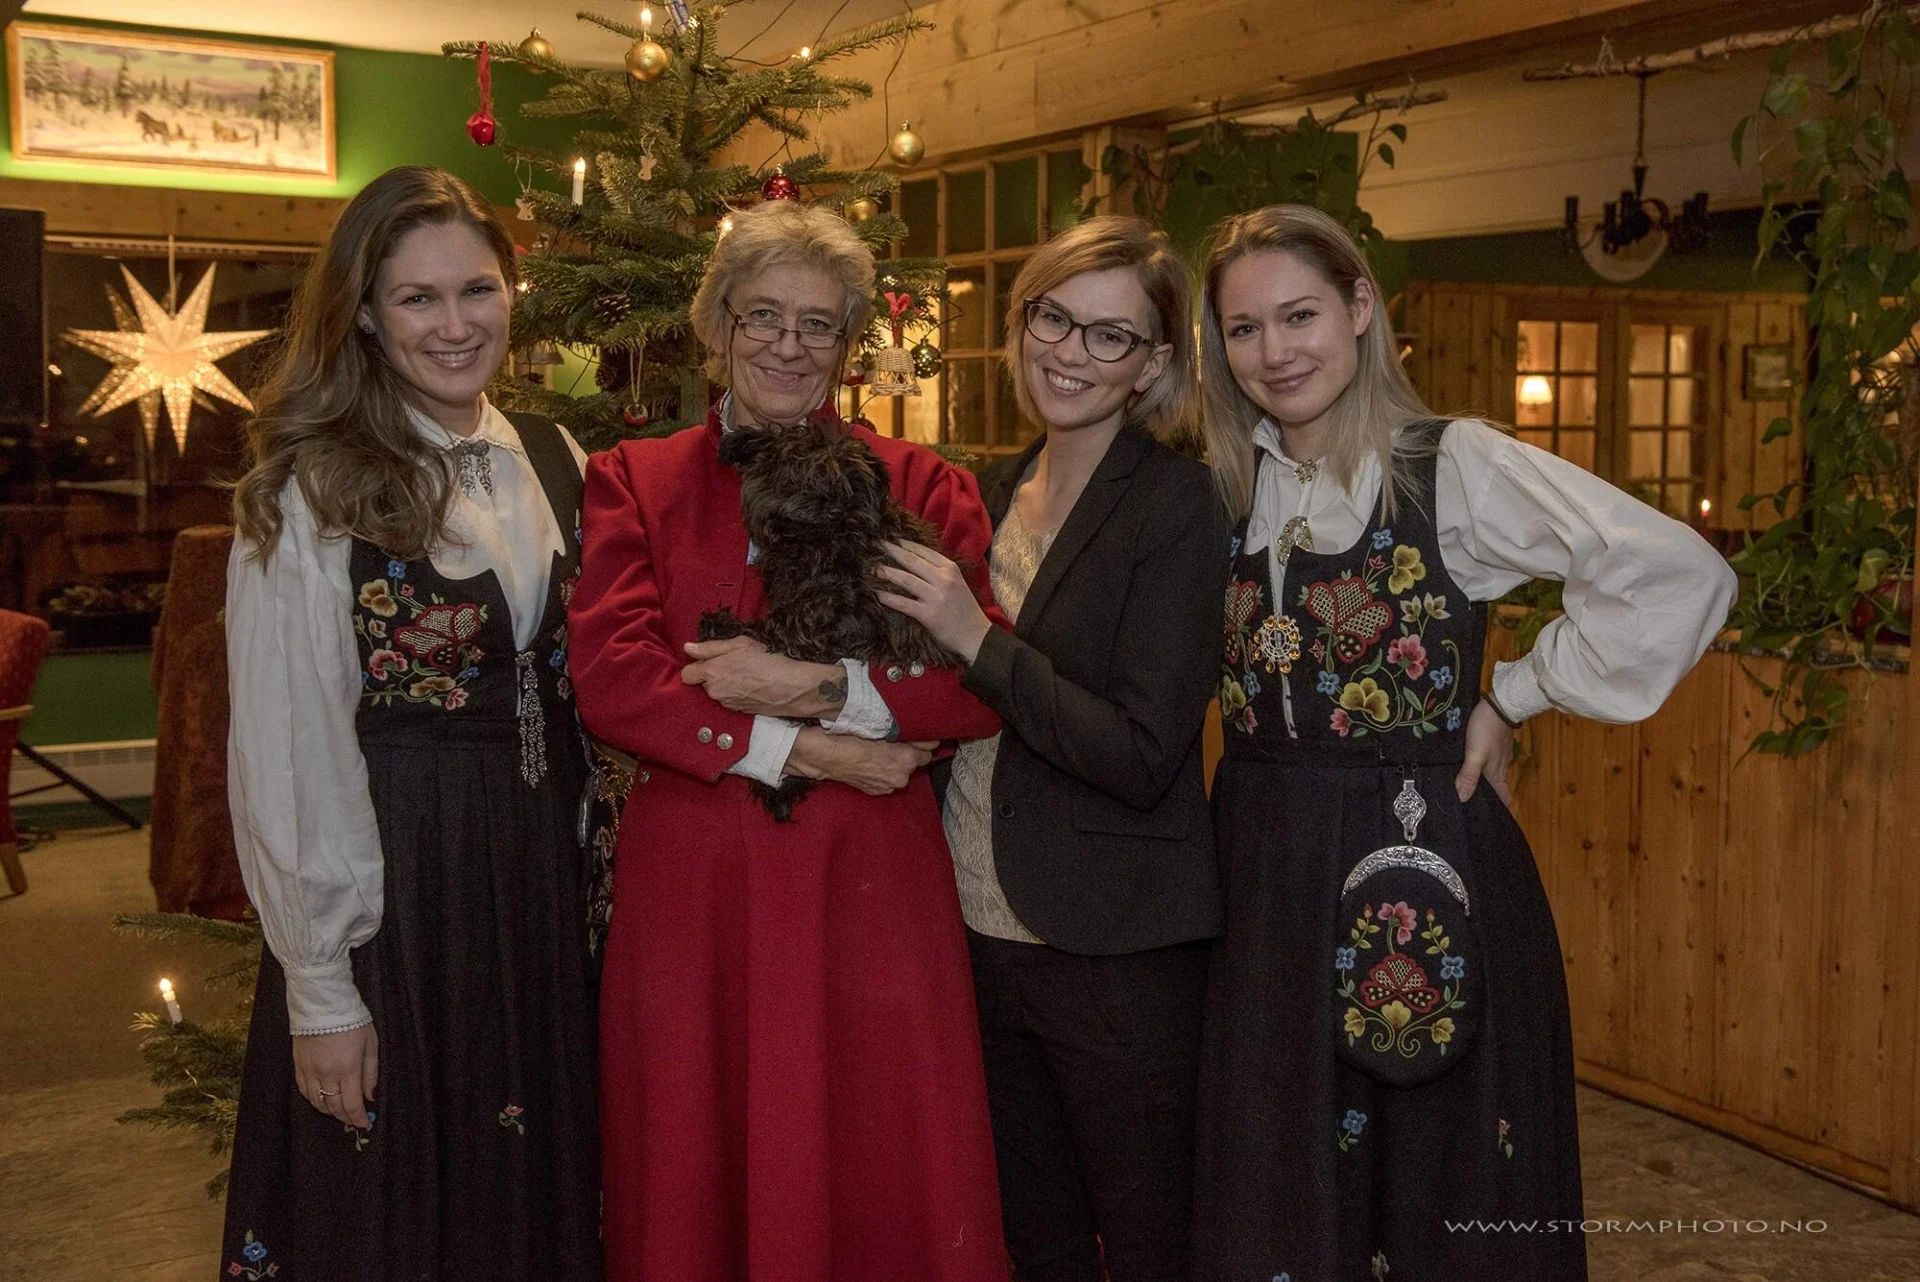 Women in traditional dress celebrate Christmas in Norway. Venabu